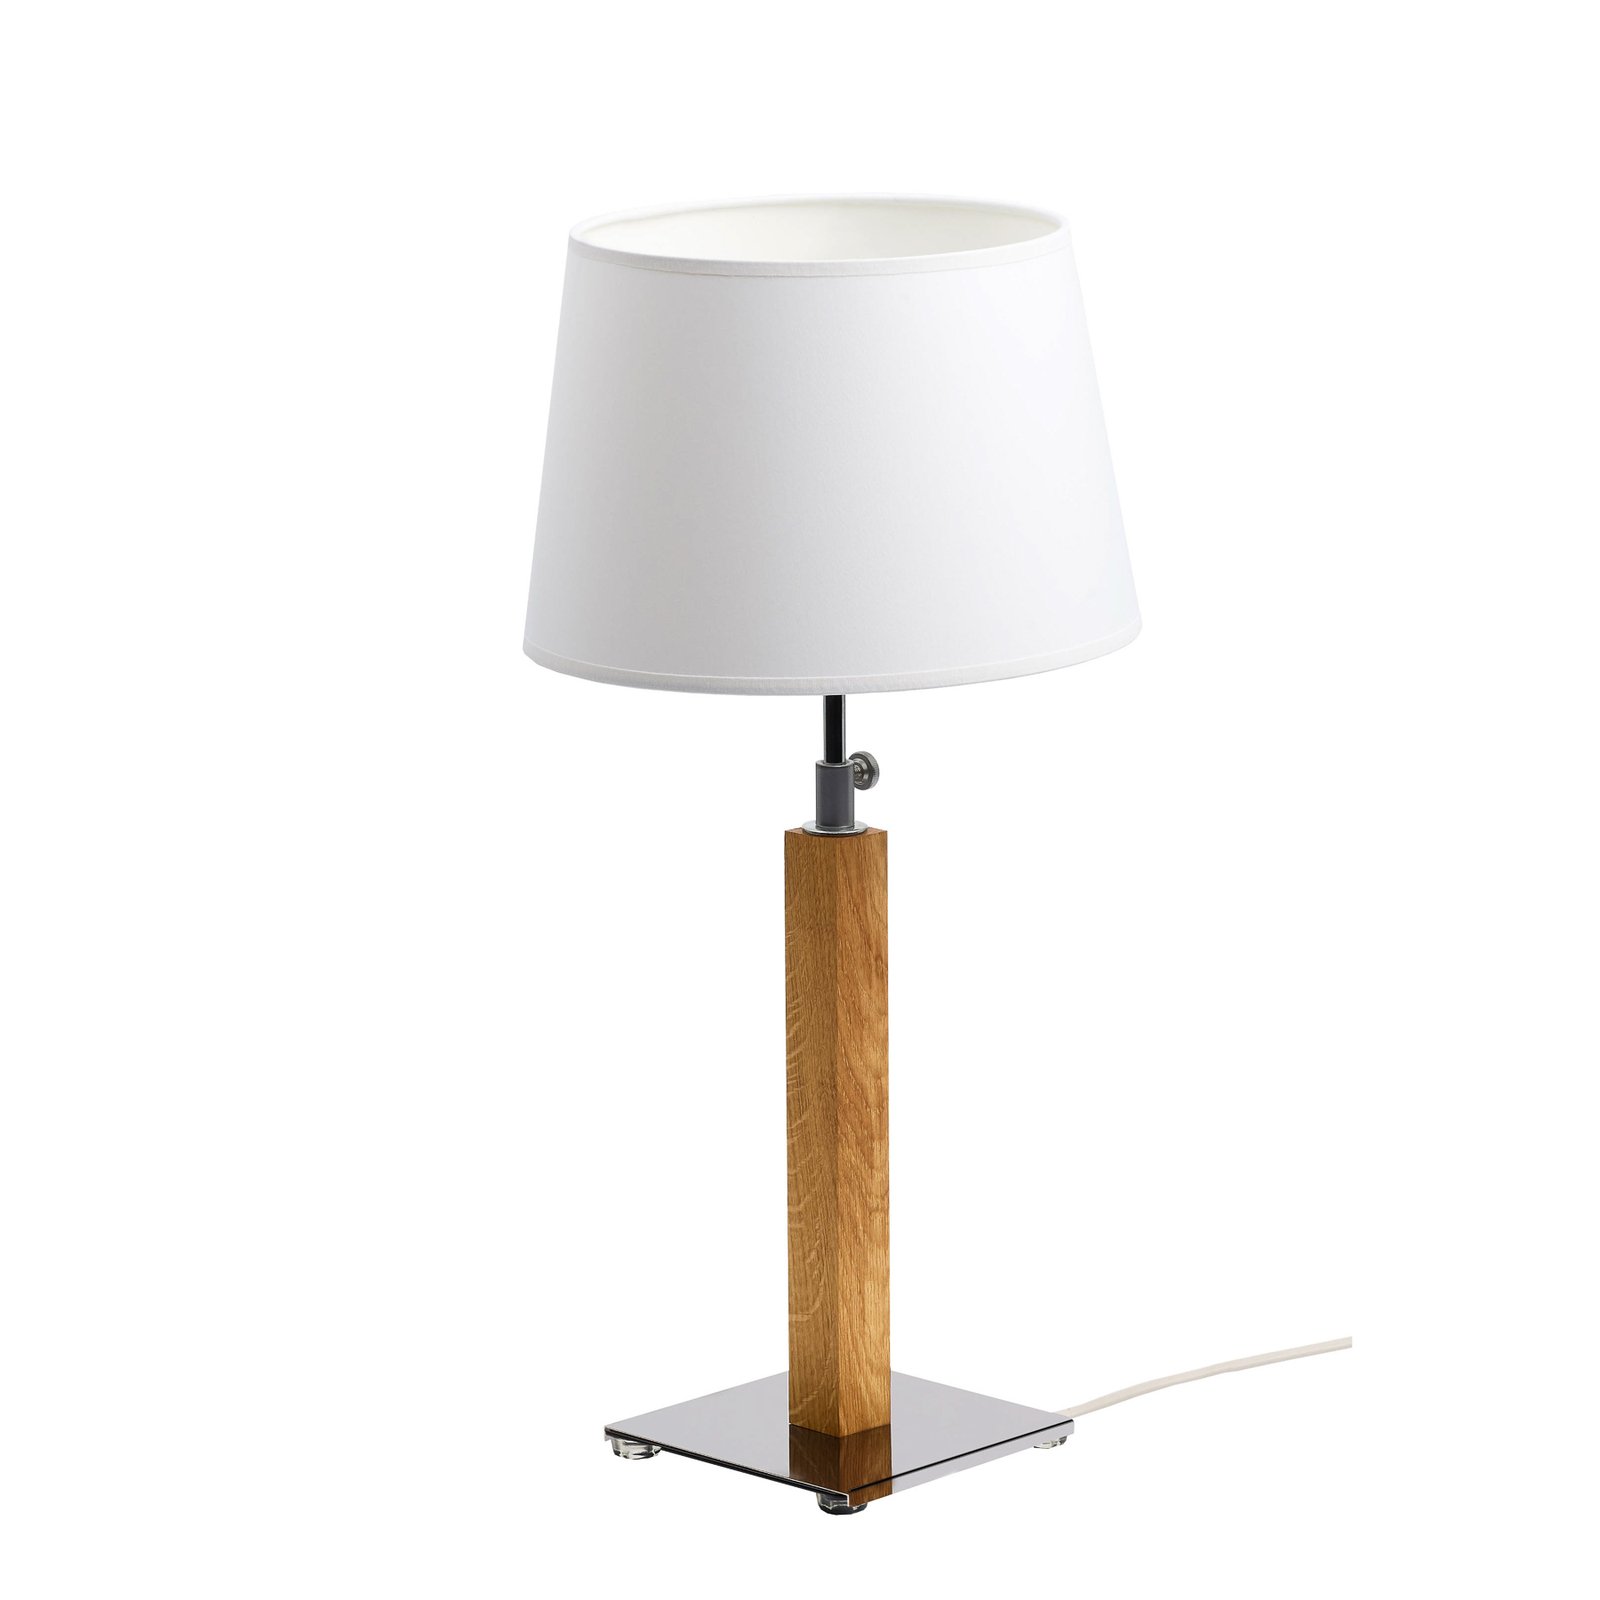 Aluminor Quatro Up stolní lampa dub světlý/chrom